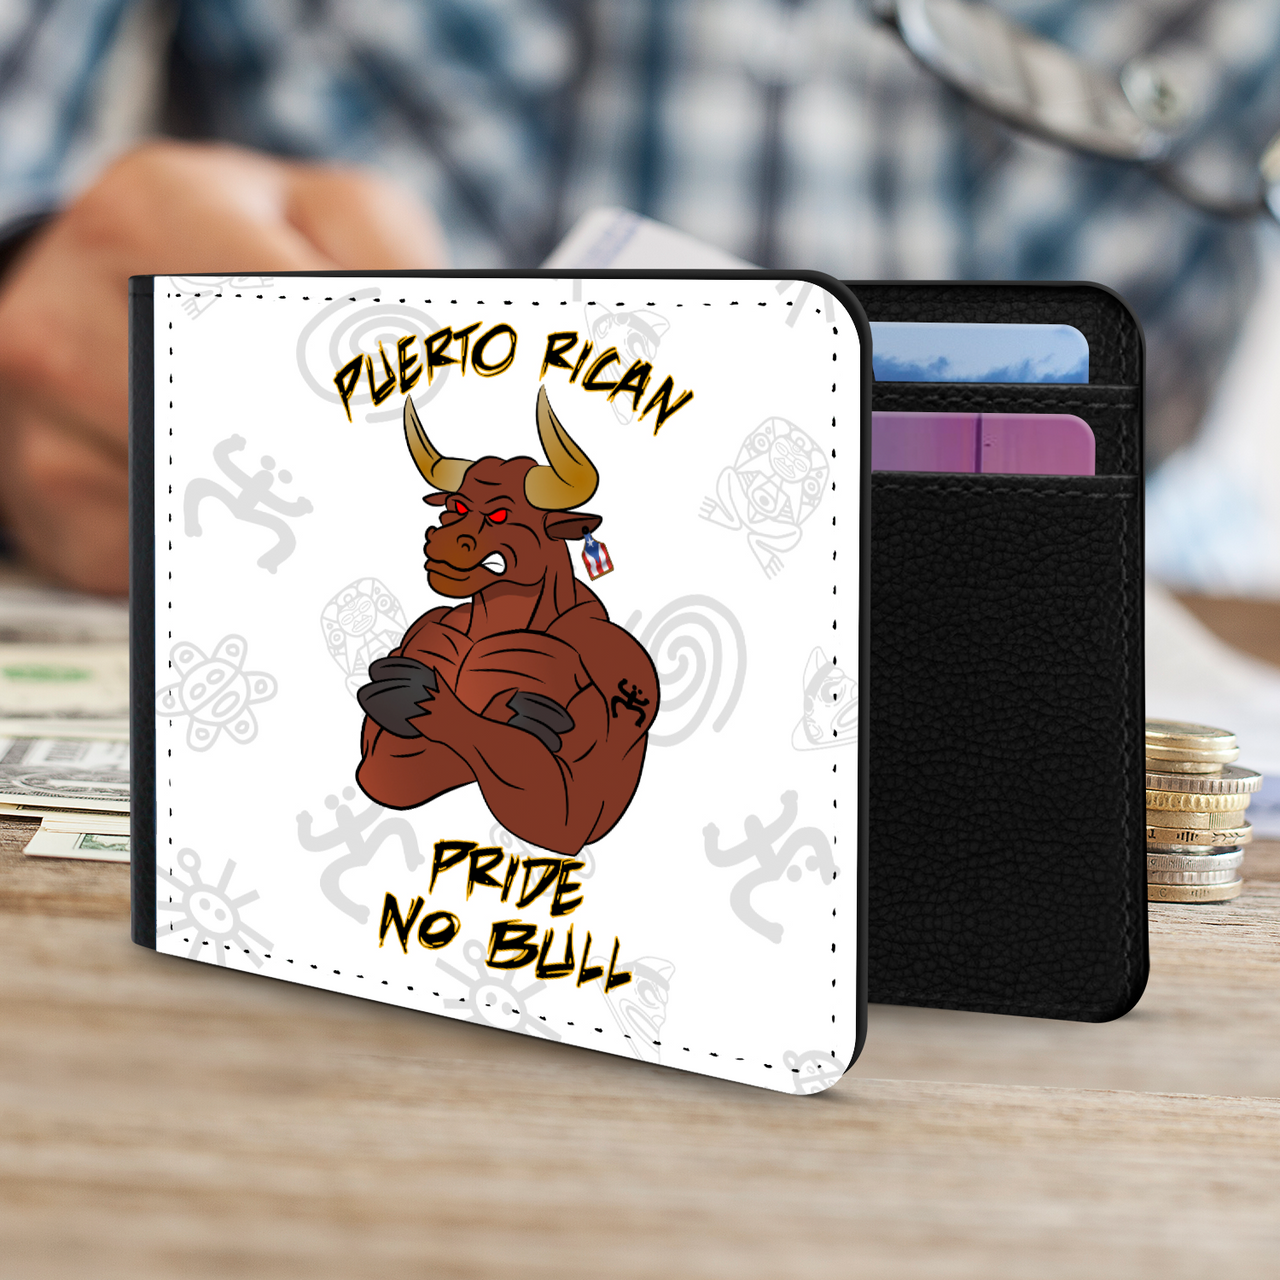 Puerto Rican Pride "No Bull" faux leather gentleman's wallet